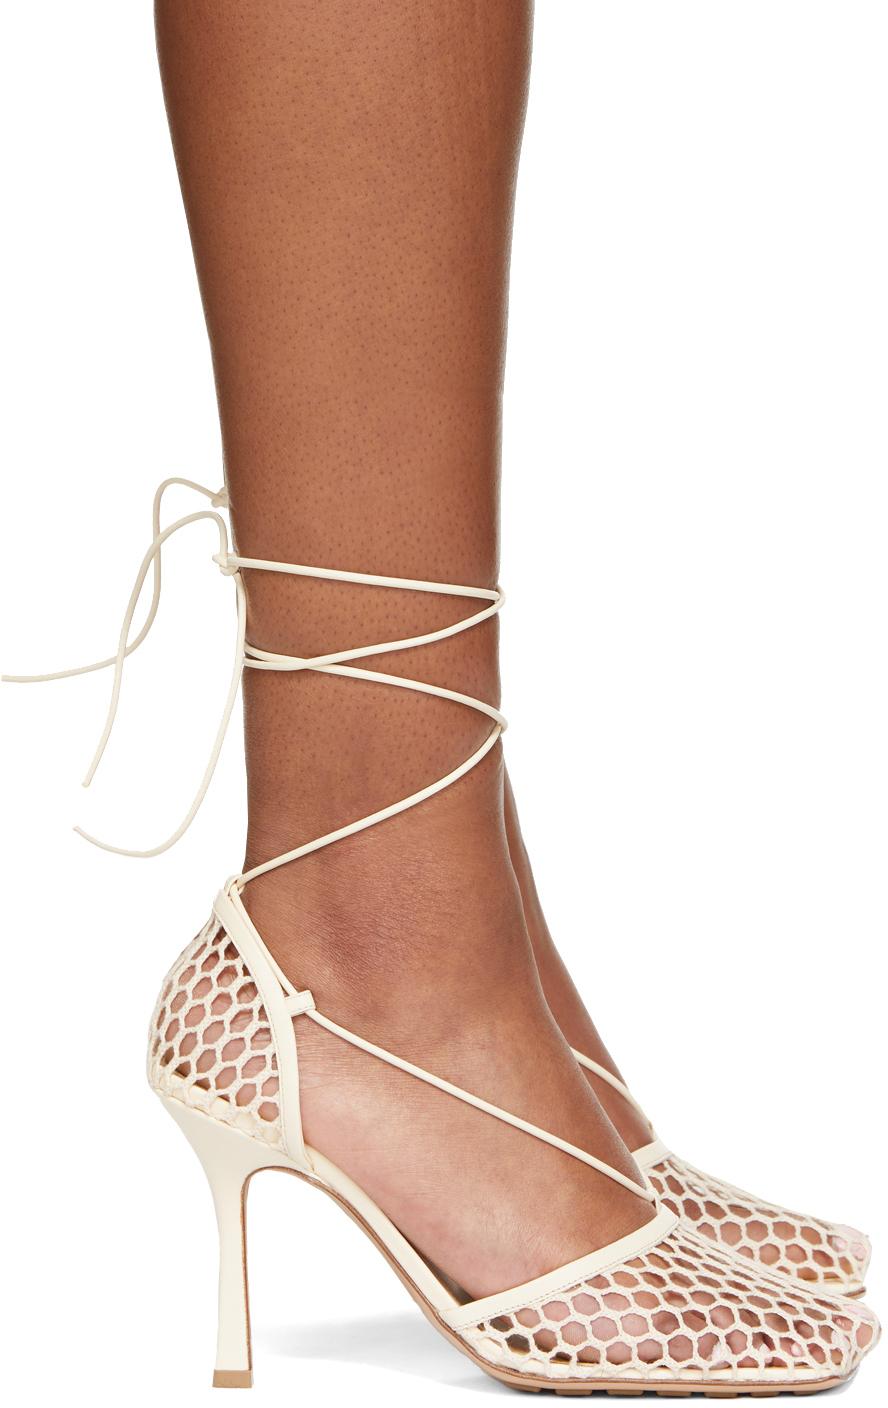 Lulus Taylor Heeled Shoes Off White Formal Ankle Strap Heel Sandal Size 8.5  | eBay